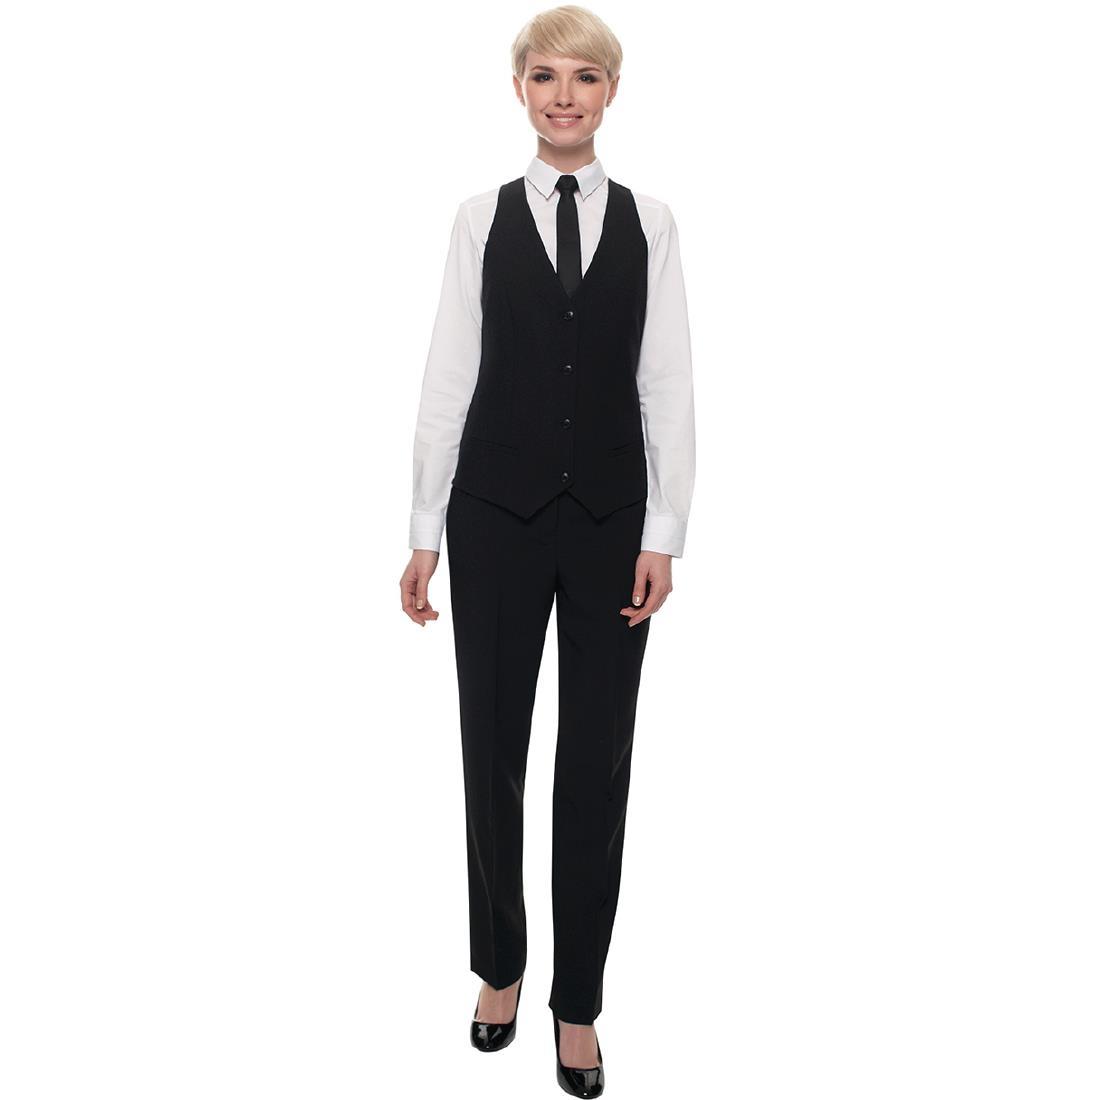 Events Ladies Black Waistcoat - Size M - BB173-M  - 2